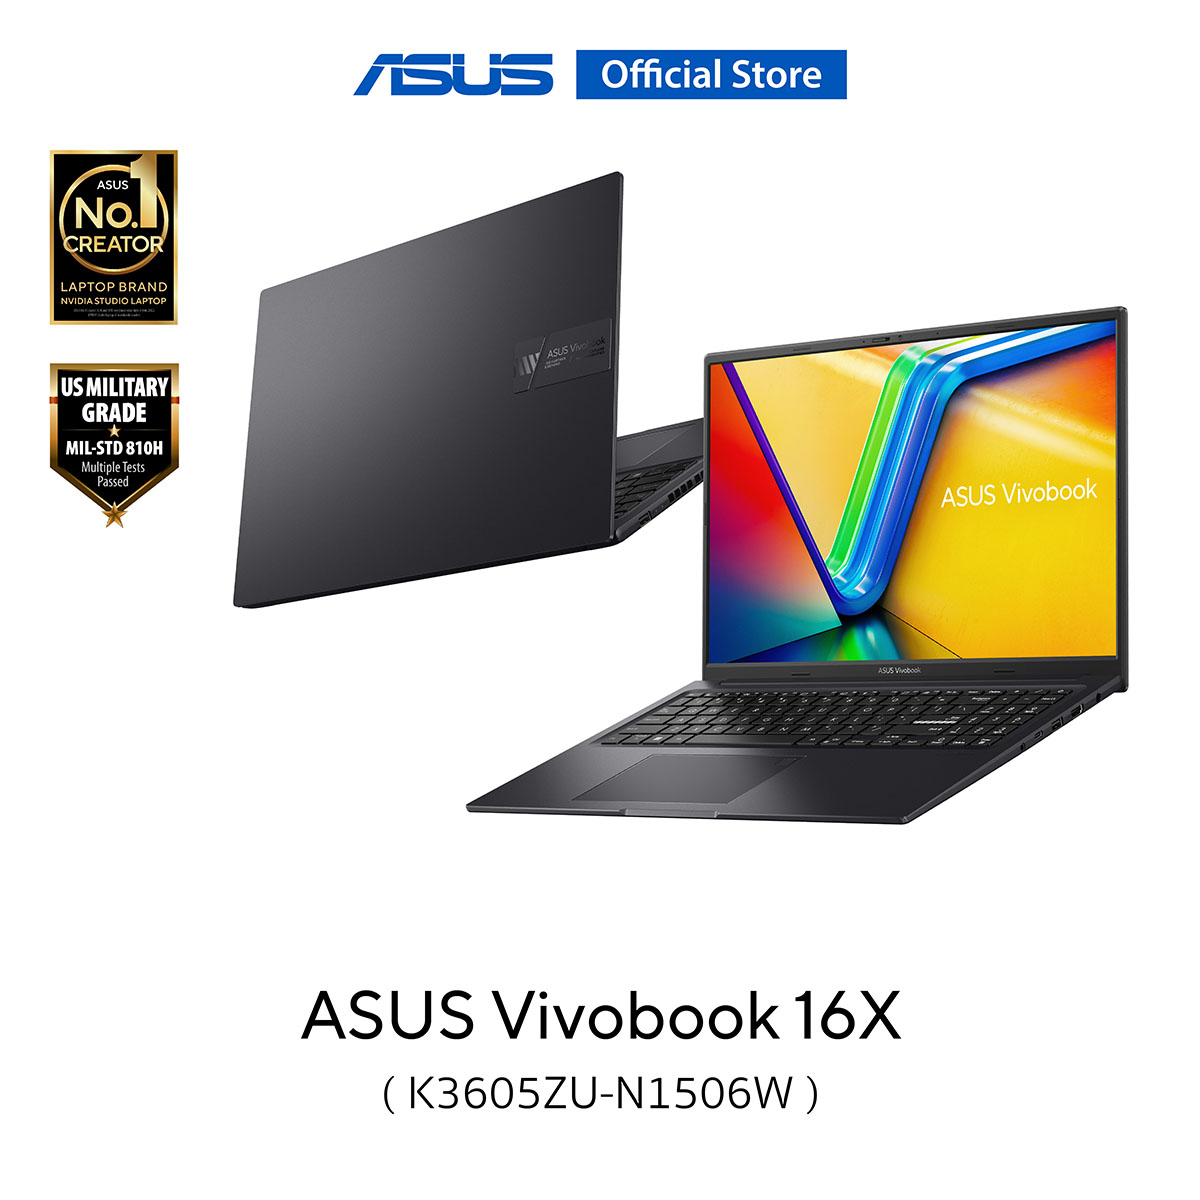 ASUS Vivobook 16X K3605ZU-N1594W, 16 Inch thin and light laptop